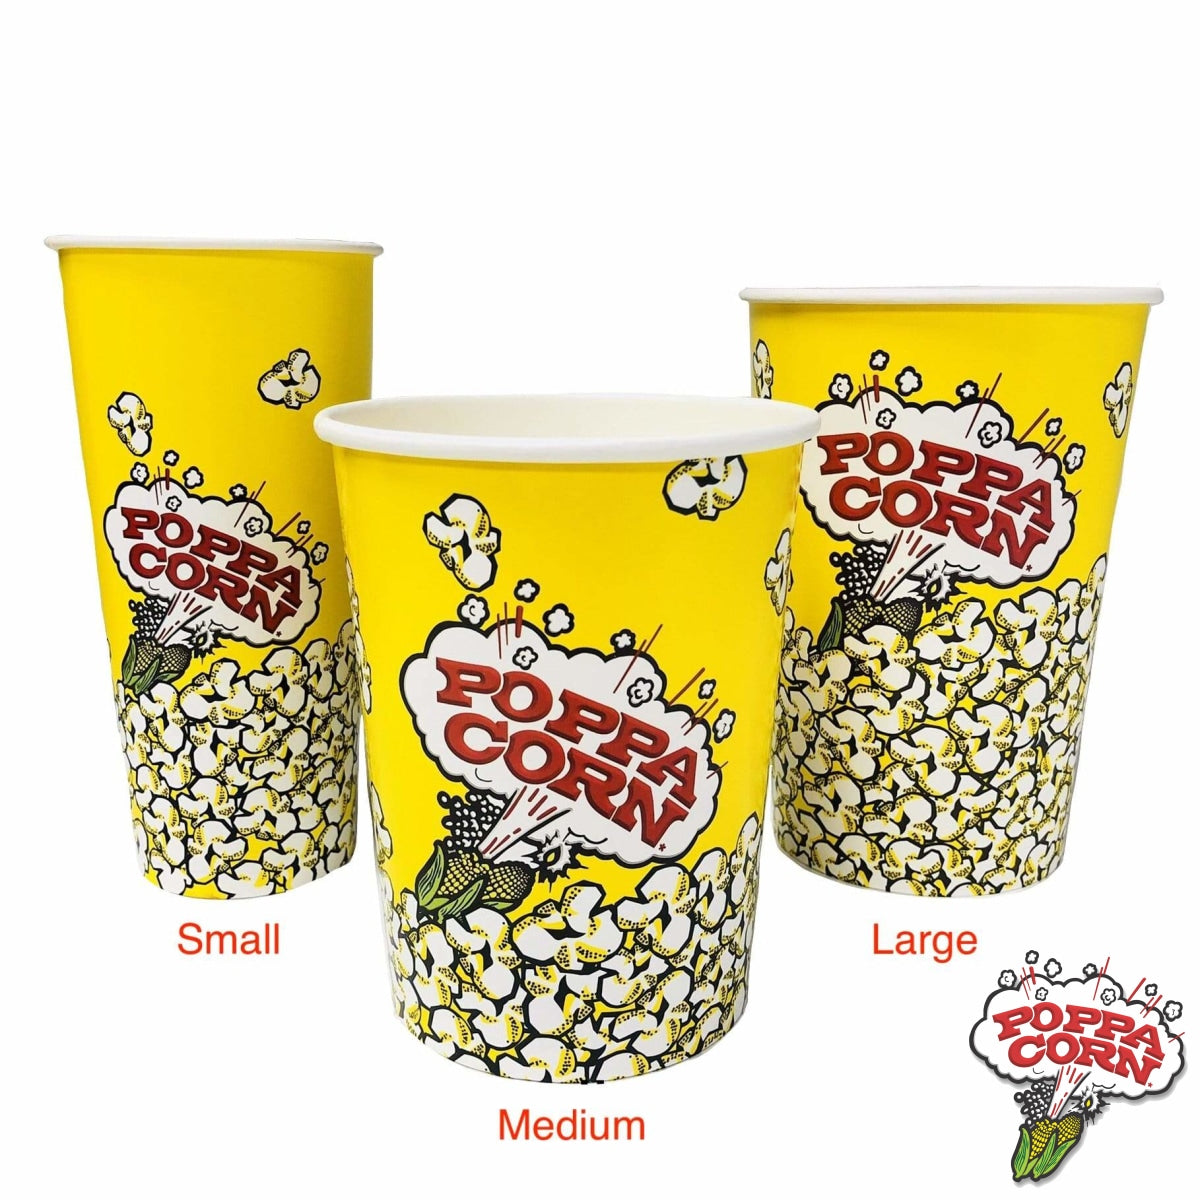 CUP024 - Rolled Rim Popcorn Cups - Small 24oz - 1000/Case - Poppa Corn Corp